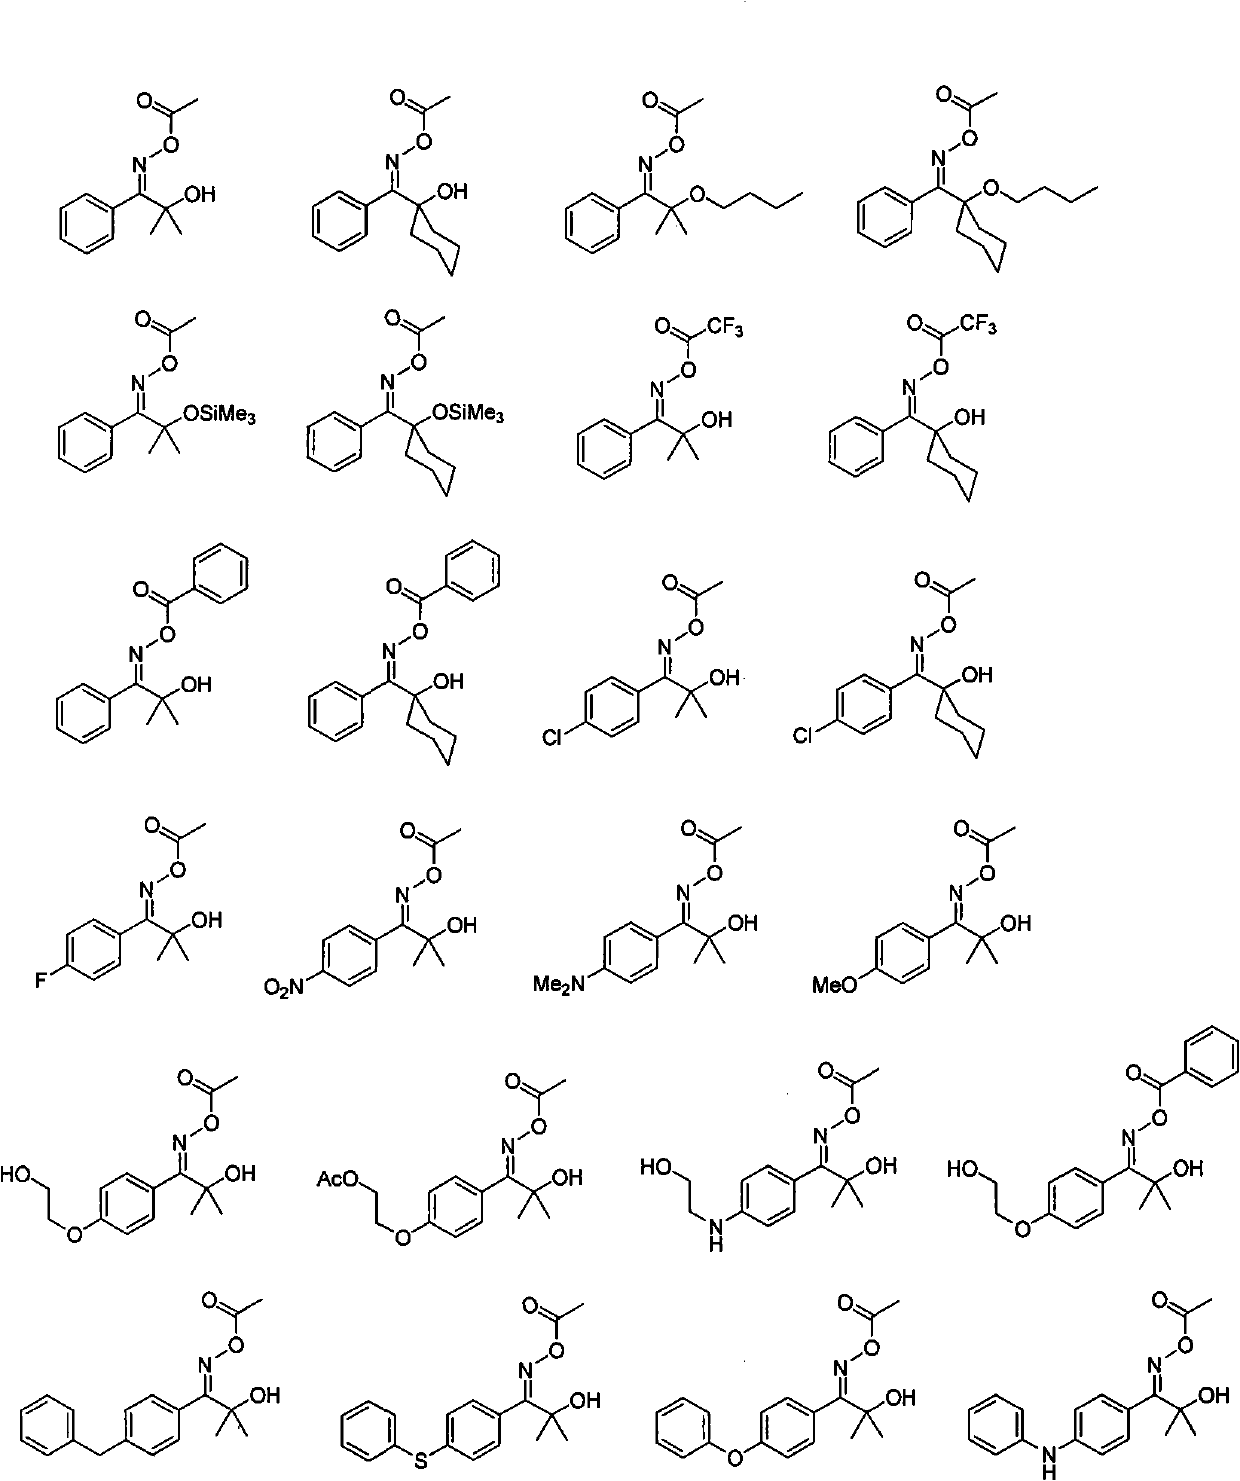 Aromatic ketone oxime photoinitiator compound